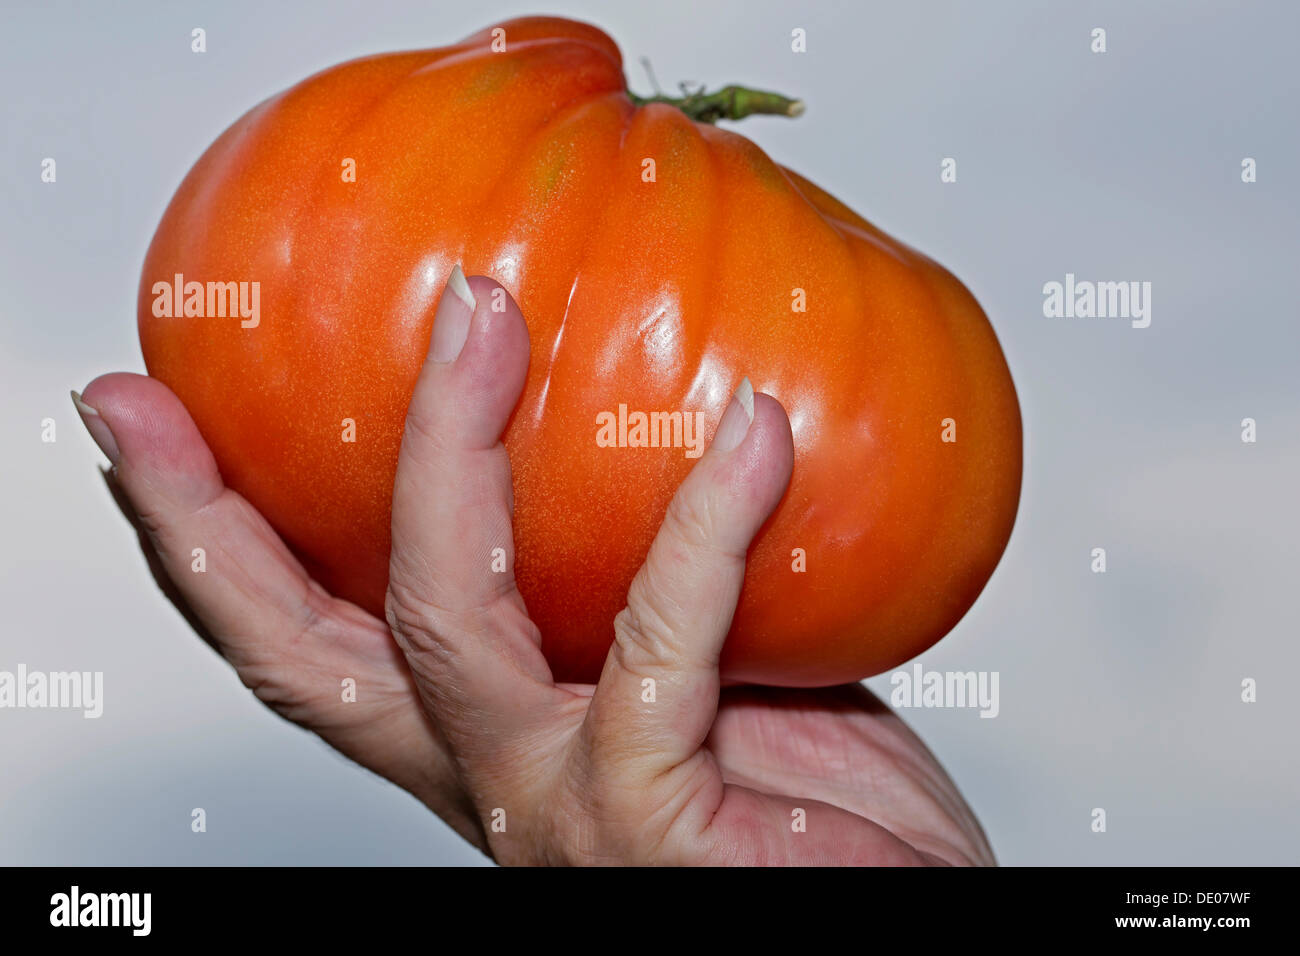 Hand holding an ox heart tomato Stock Photo